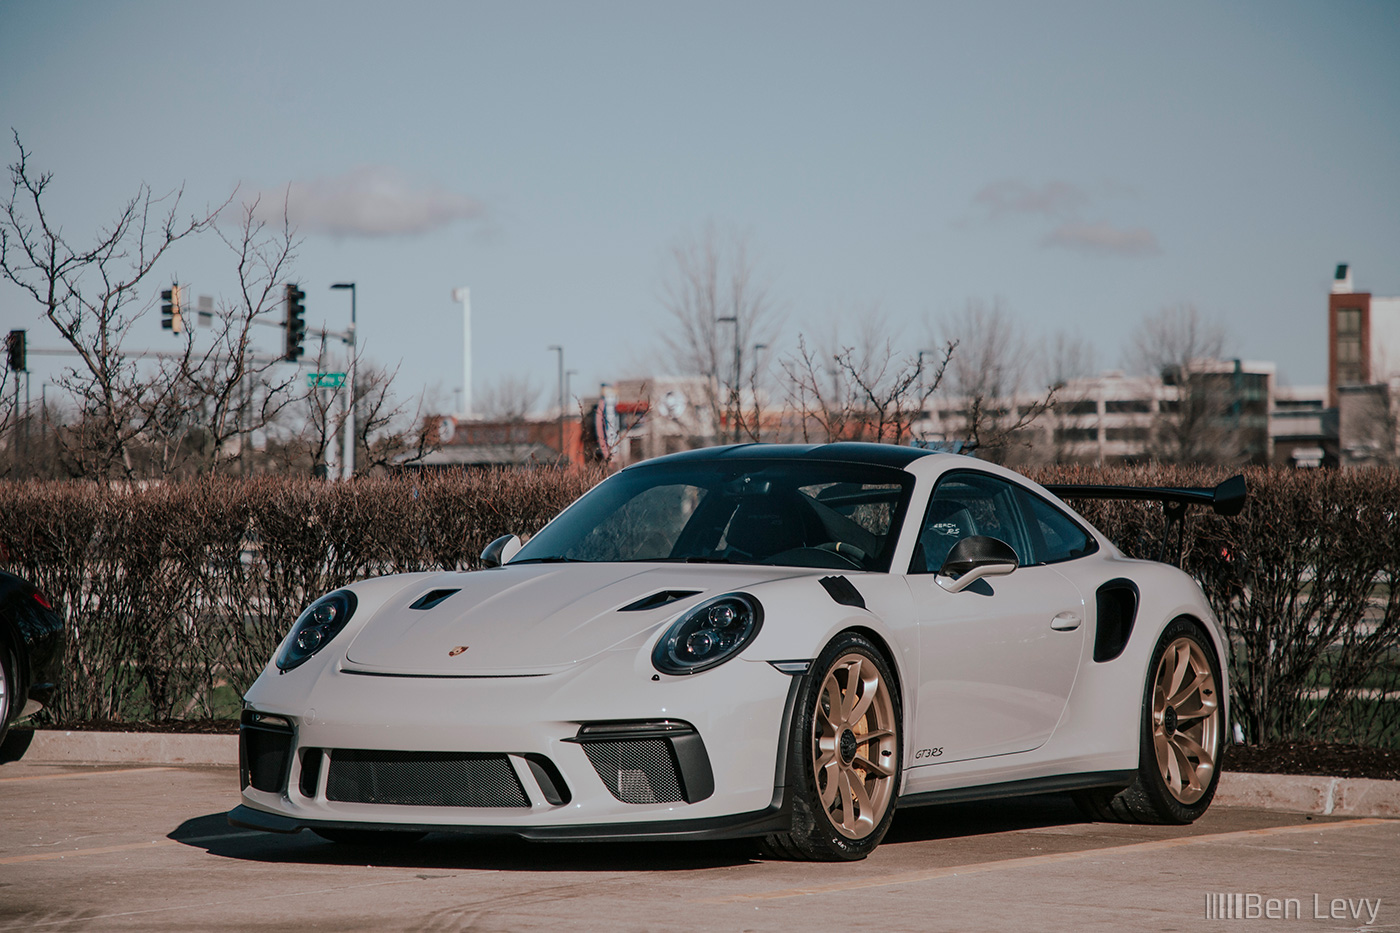 Grey Porsche 911 GT3 RS in Oak Brook